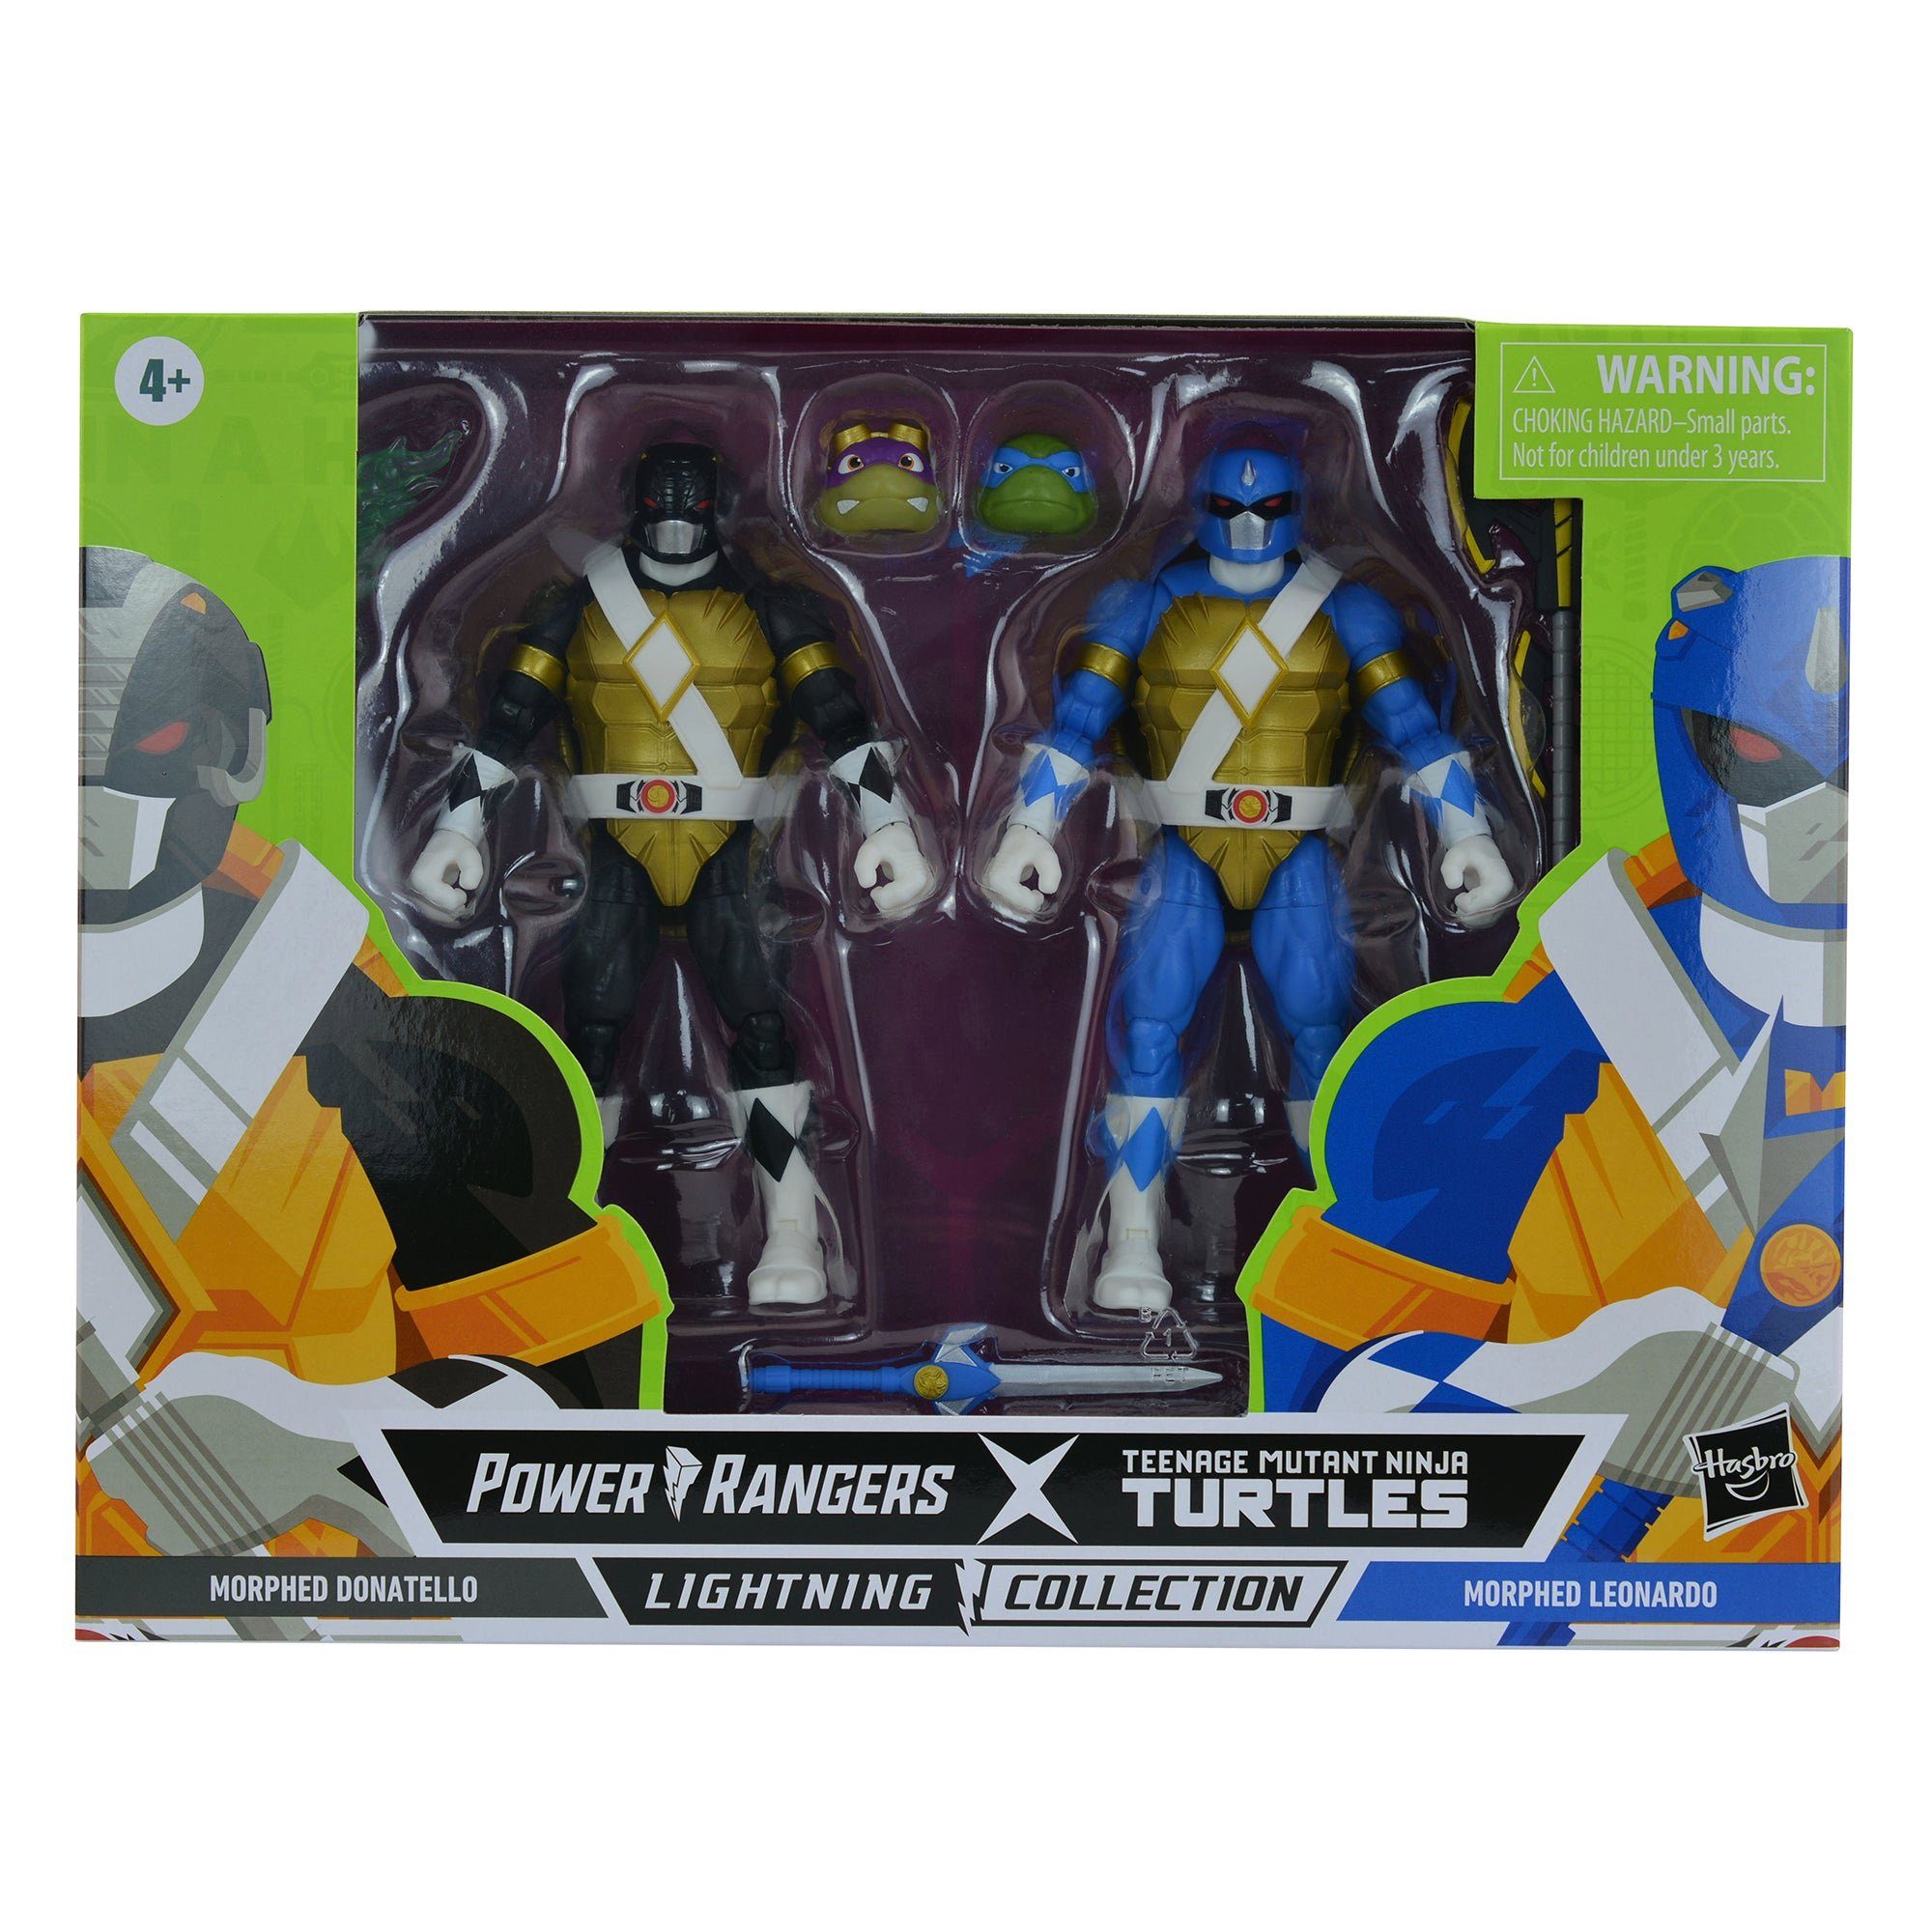 Hasbro Actionfigur Power Pack, Leonardo 2 Morphed Morphed - 2 Collection Lightning & & Donatello Rangers Spielfiguren Zubehör) (Set, 